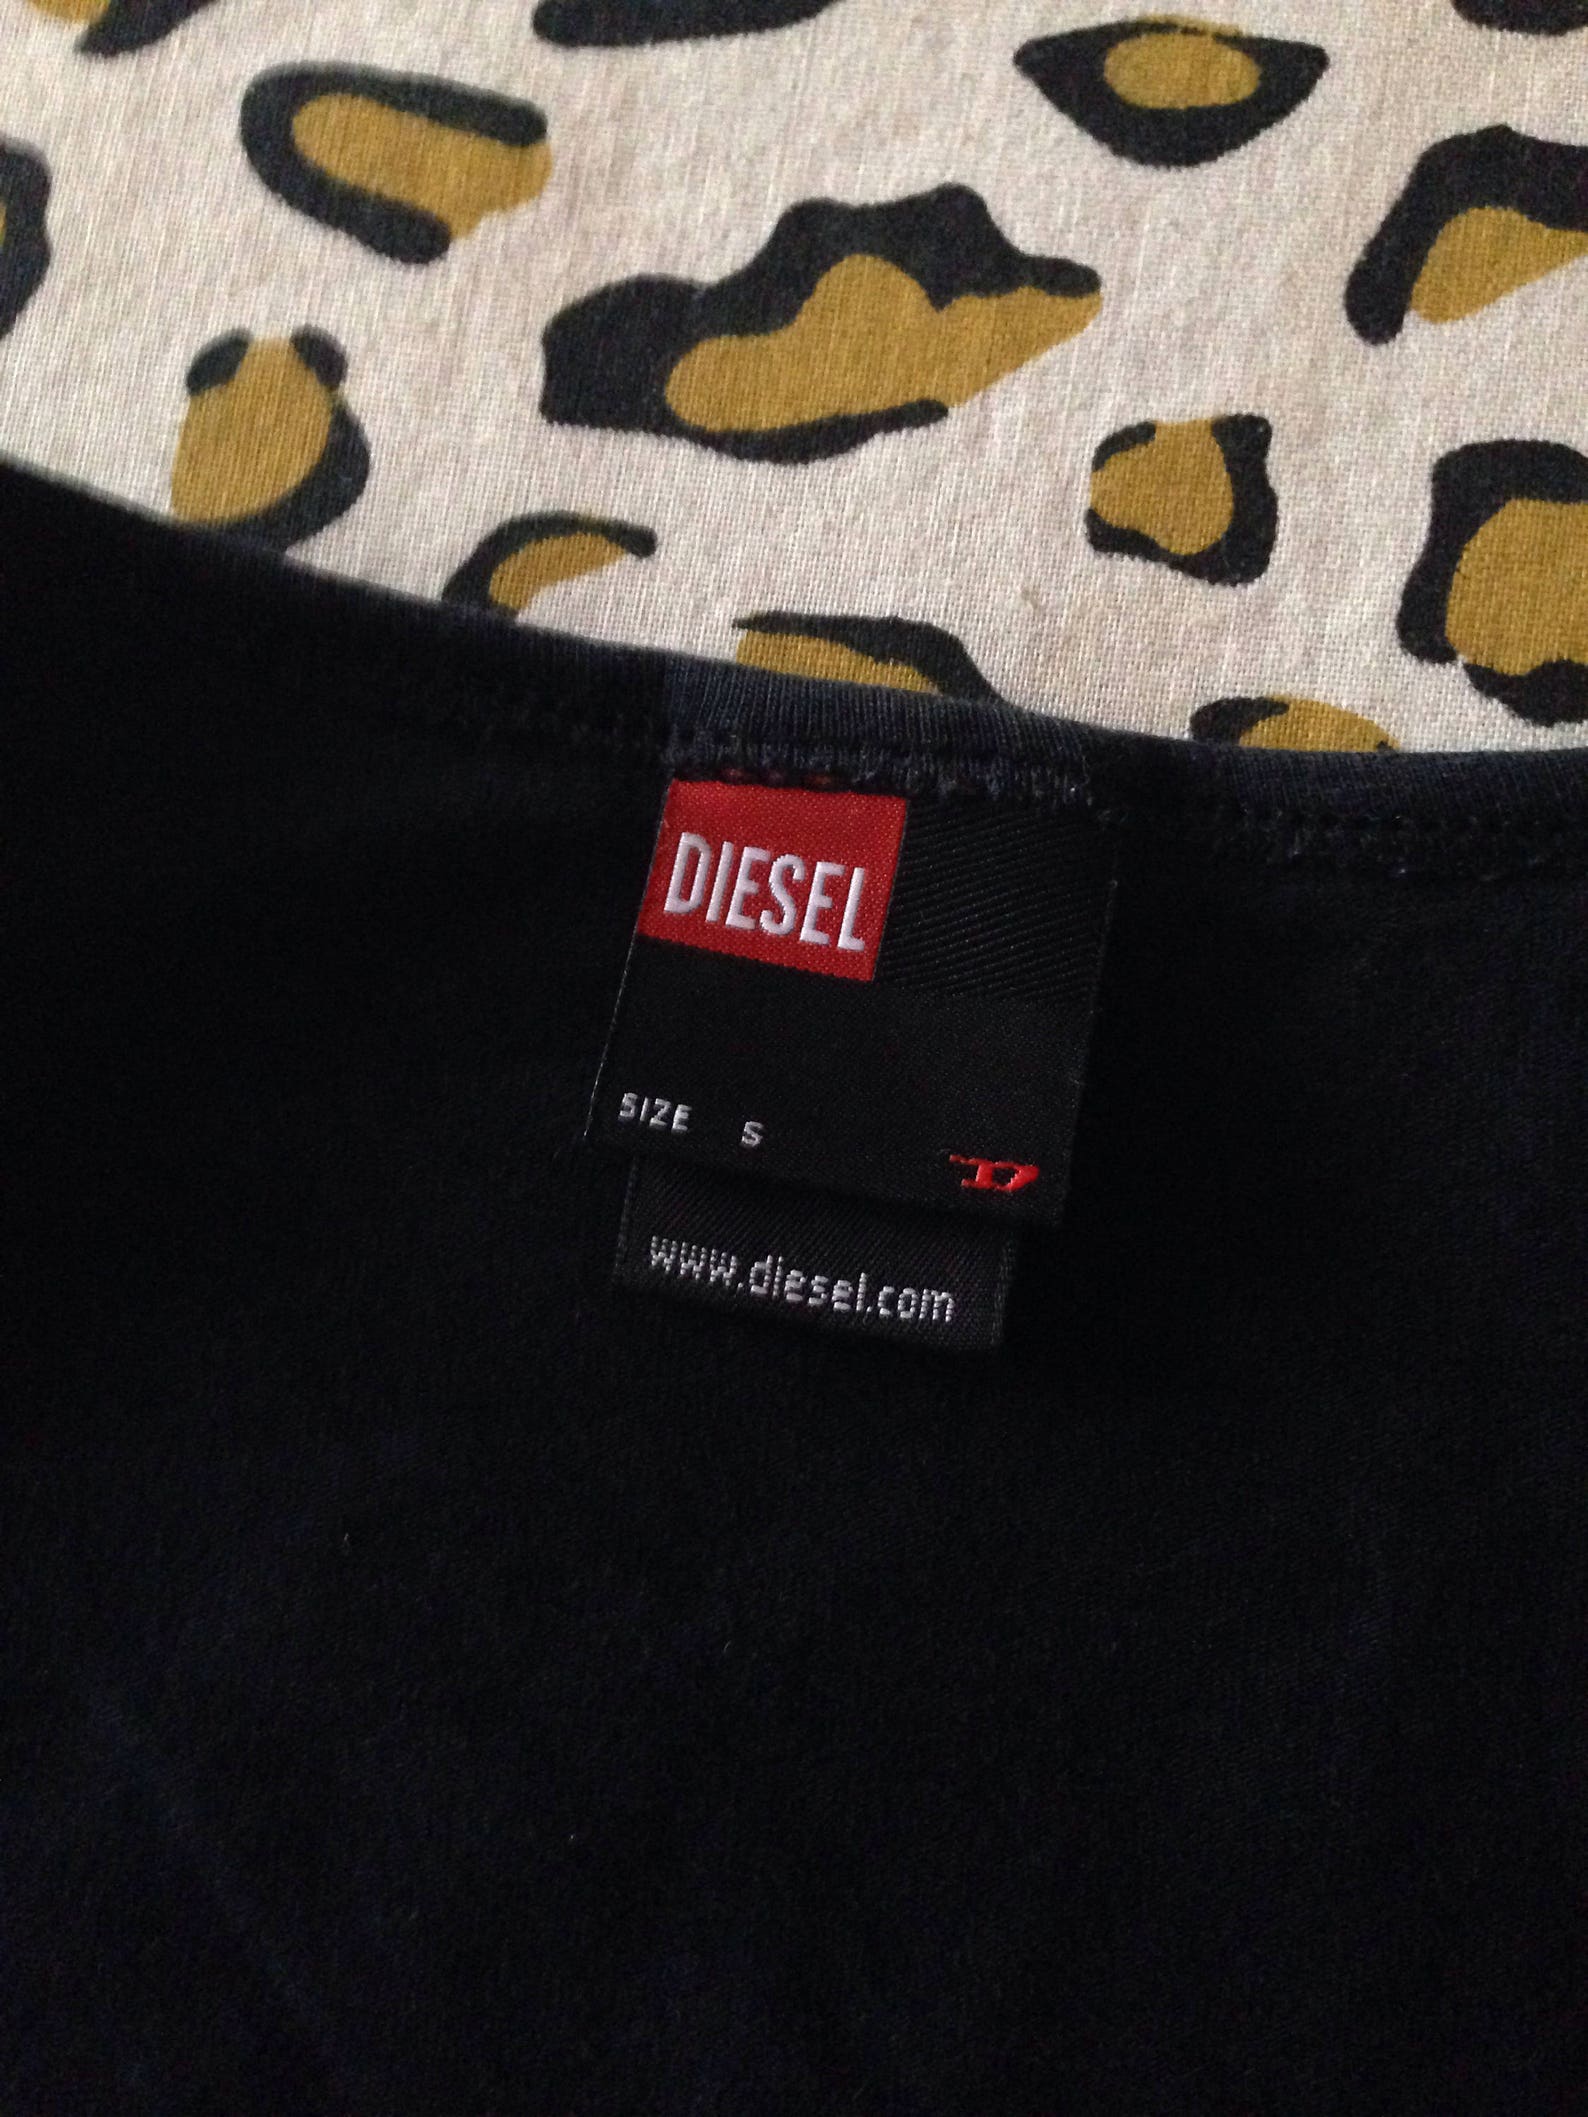 Diesel 90s Vintage Black Top With Blue Gold & Pink Diagonal | Etsy